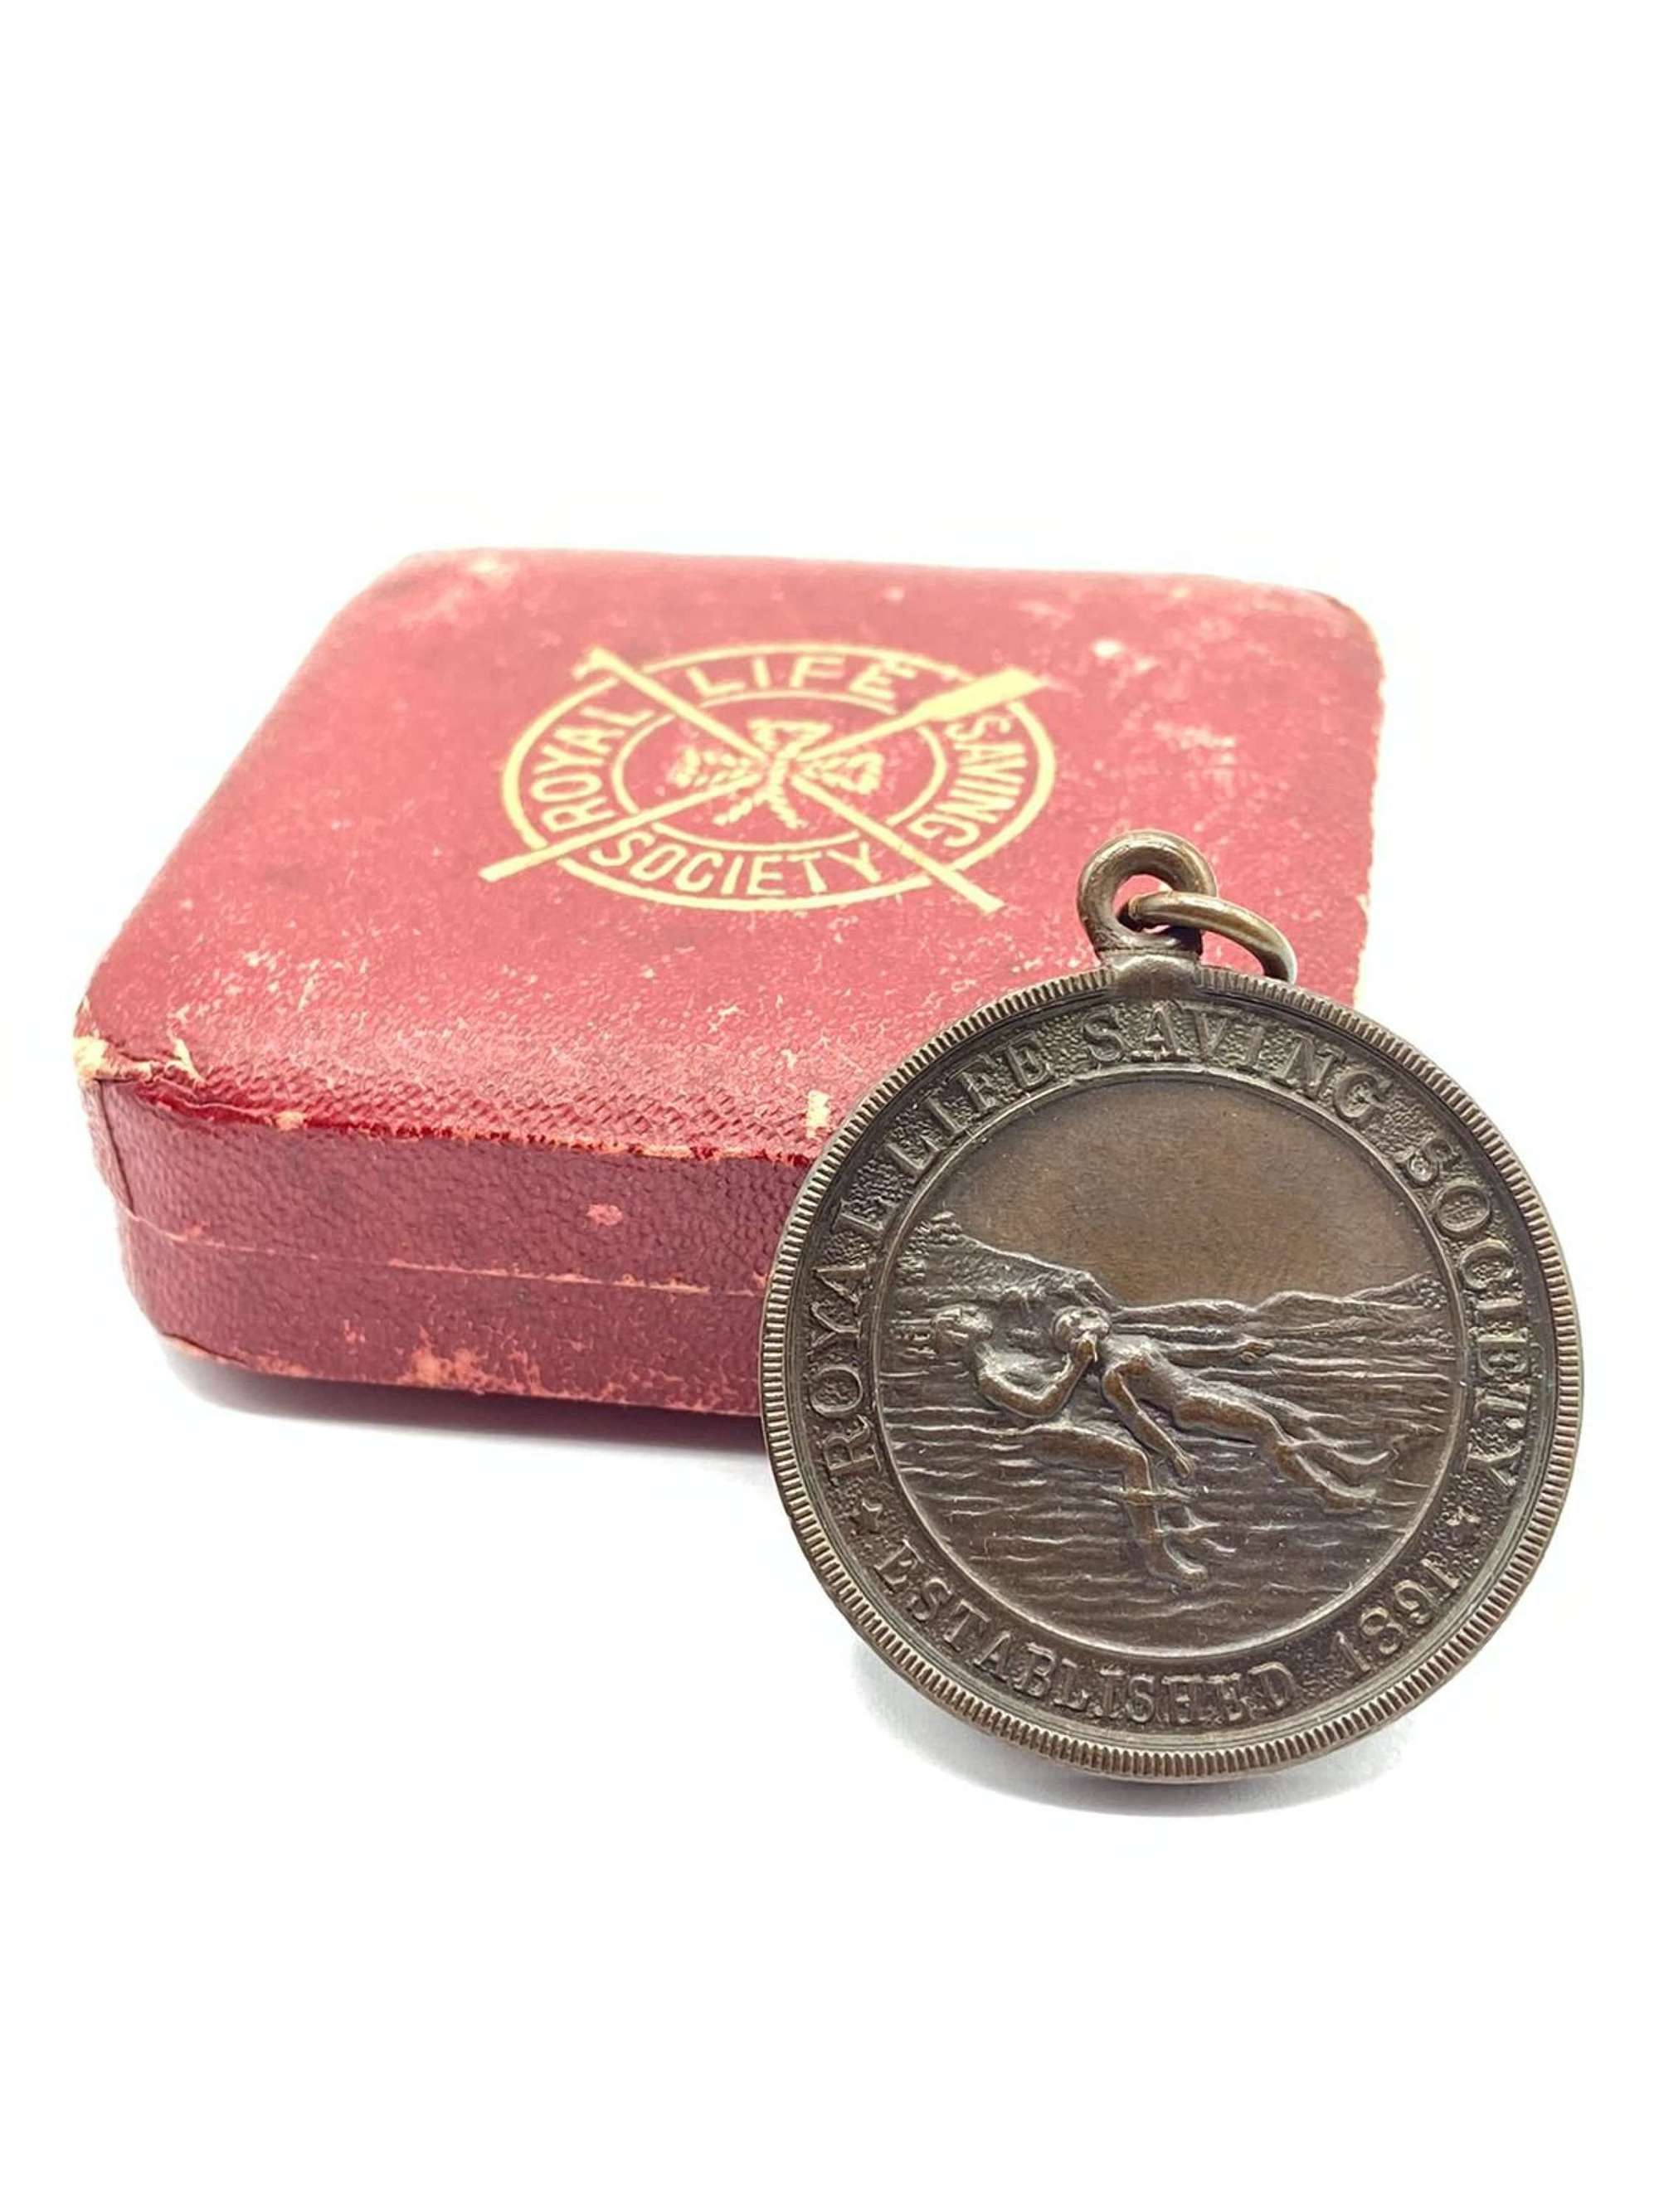 Pre WW2 British Home Front Royal Life Saving Society Boxed Medal